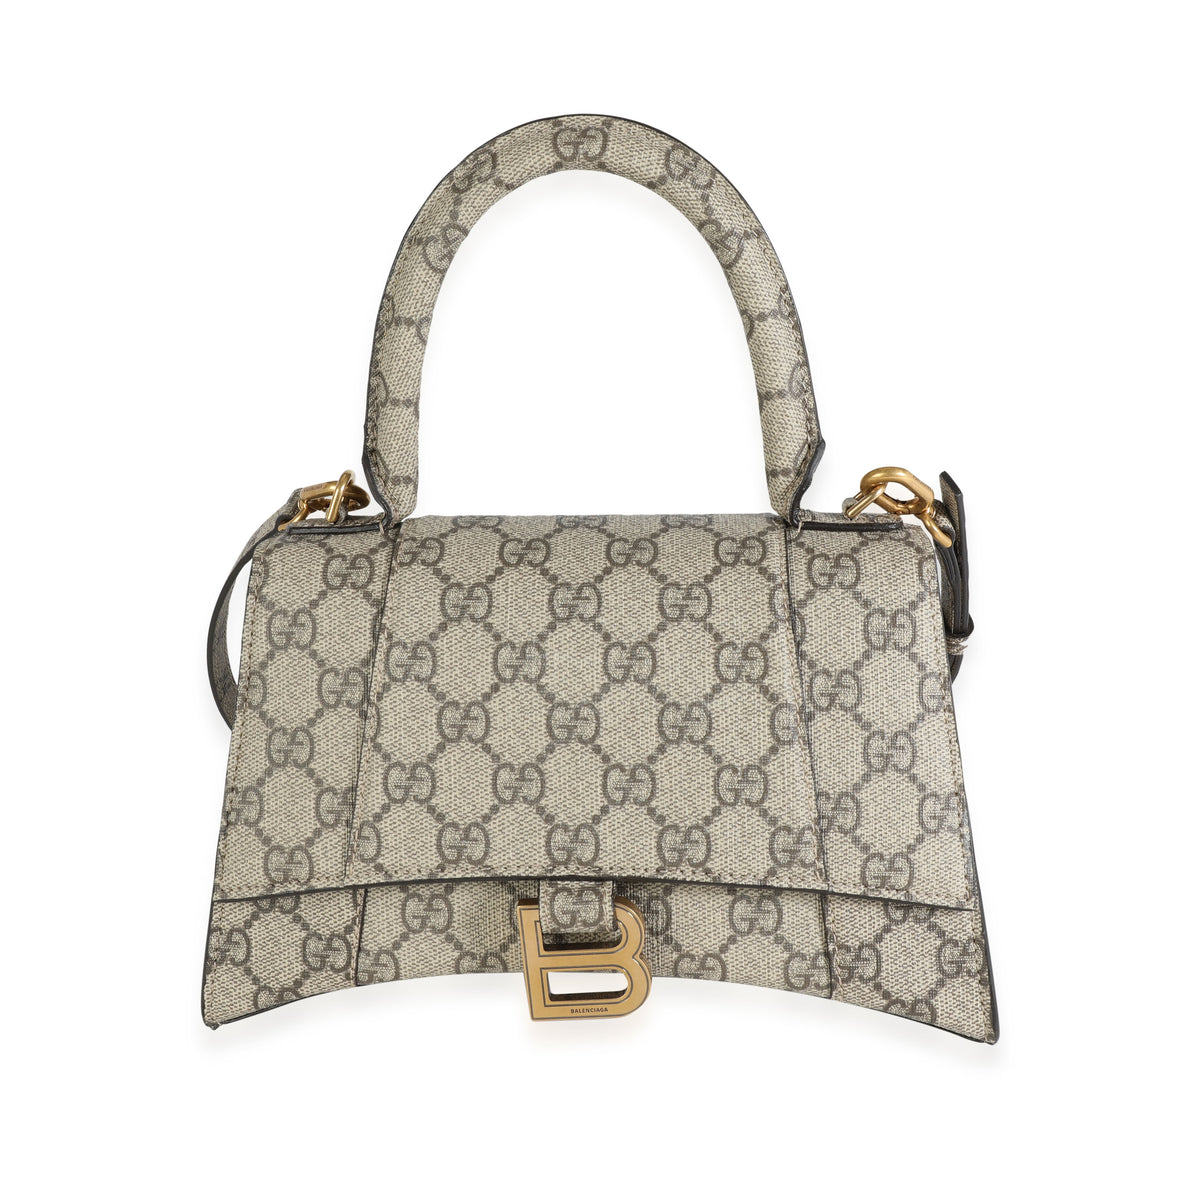 Gucci X Balenciaga The Hacker Project Small Dionysus Bag like new